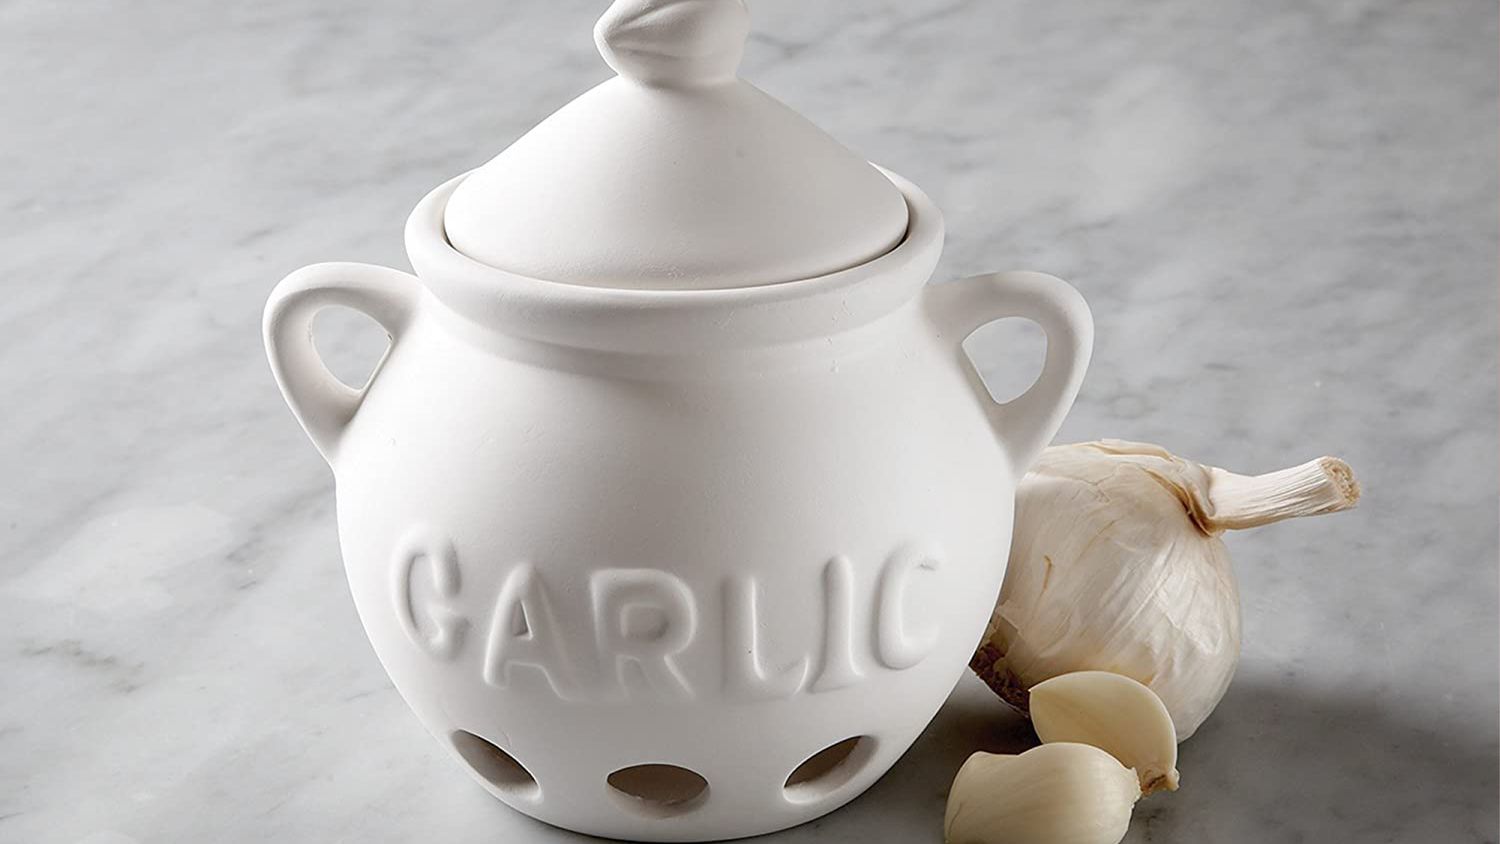 Ceramic Garlic Dish Pottery Garlic Keeper Jar Jar Garlic Pot Ceramic Garlic Keeper Garlic Jar Pottery Garlic holder